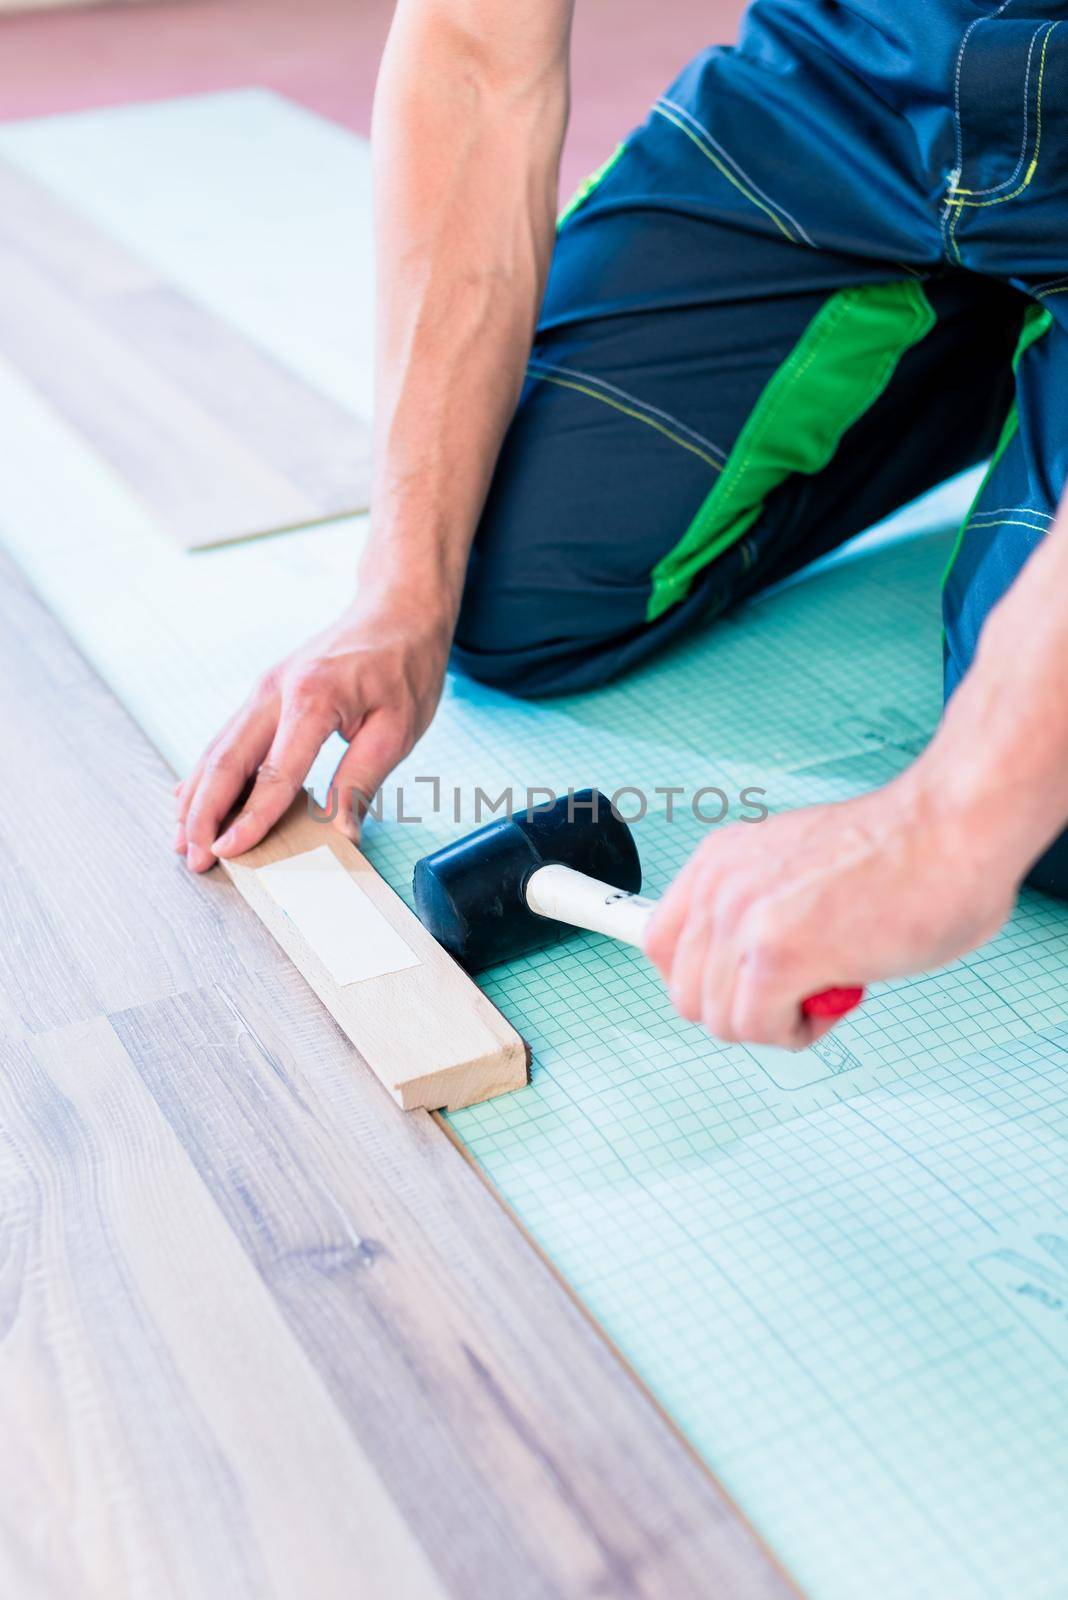 DIY workman flooring apartment floor by Kzenon